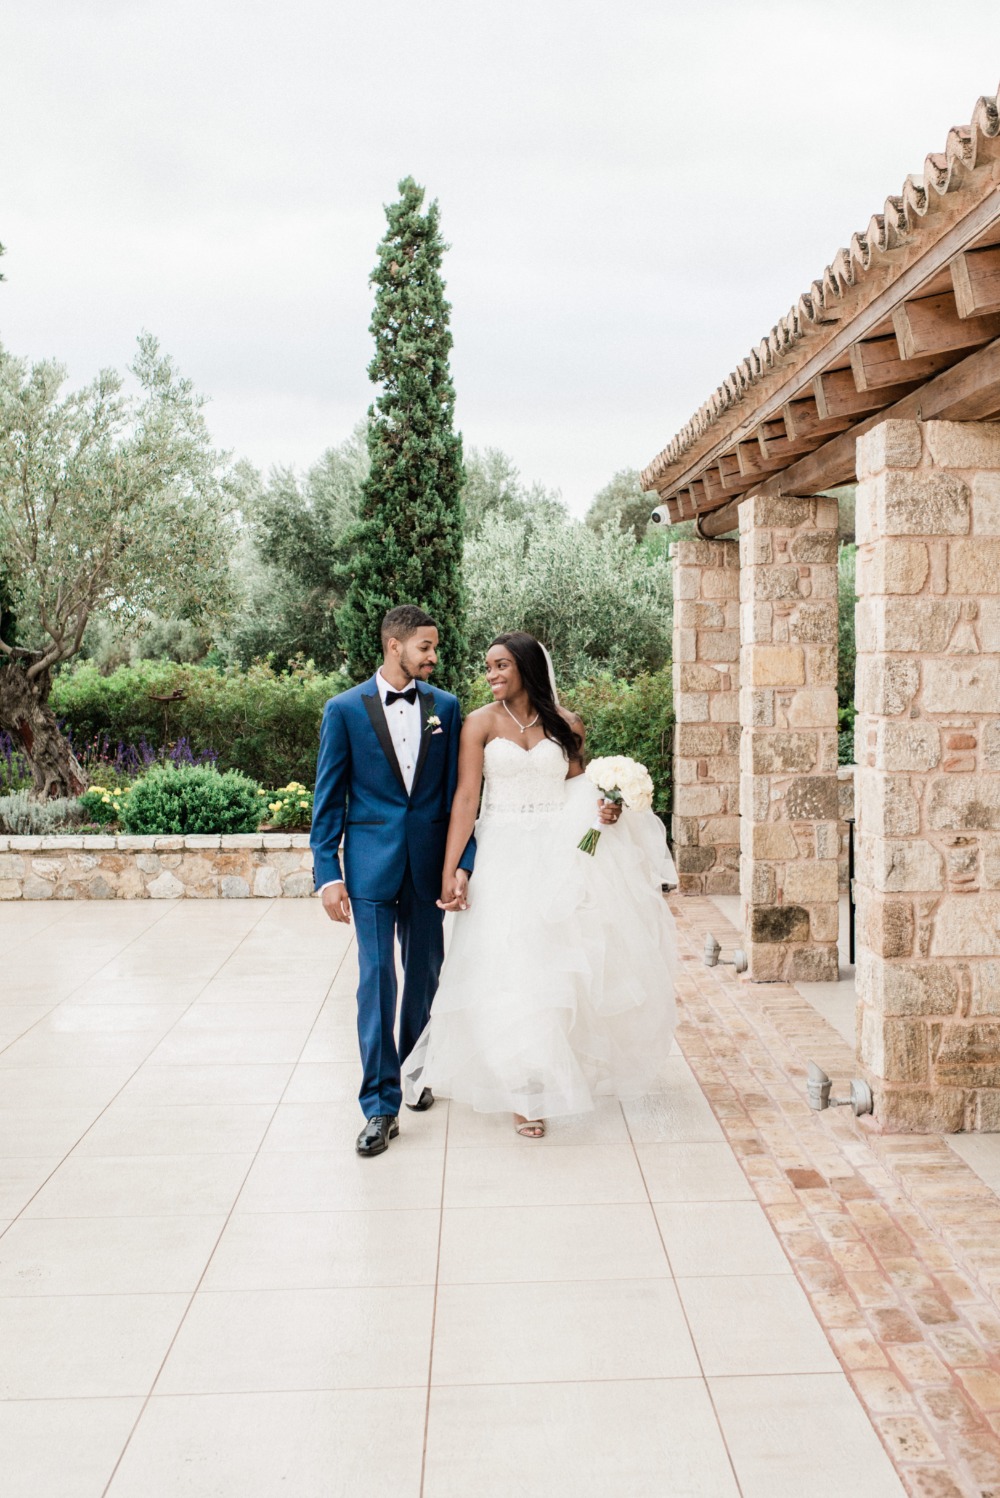 Brenae and Ryan’s Romantic Destination Wedding in Greece gallery image 12